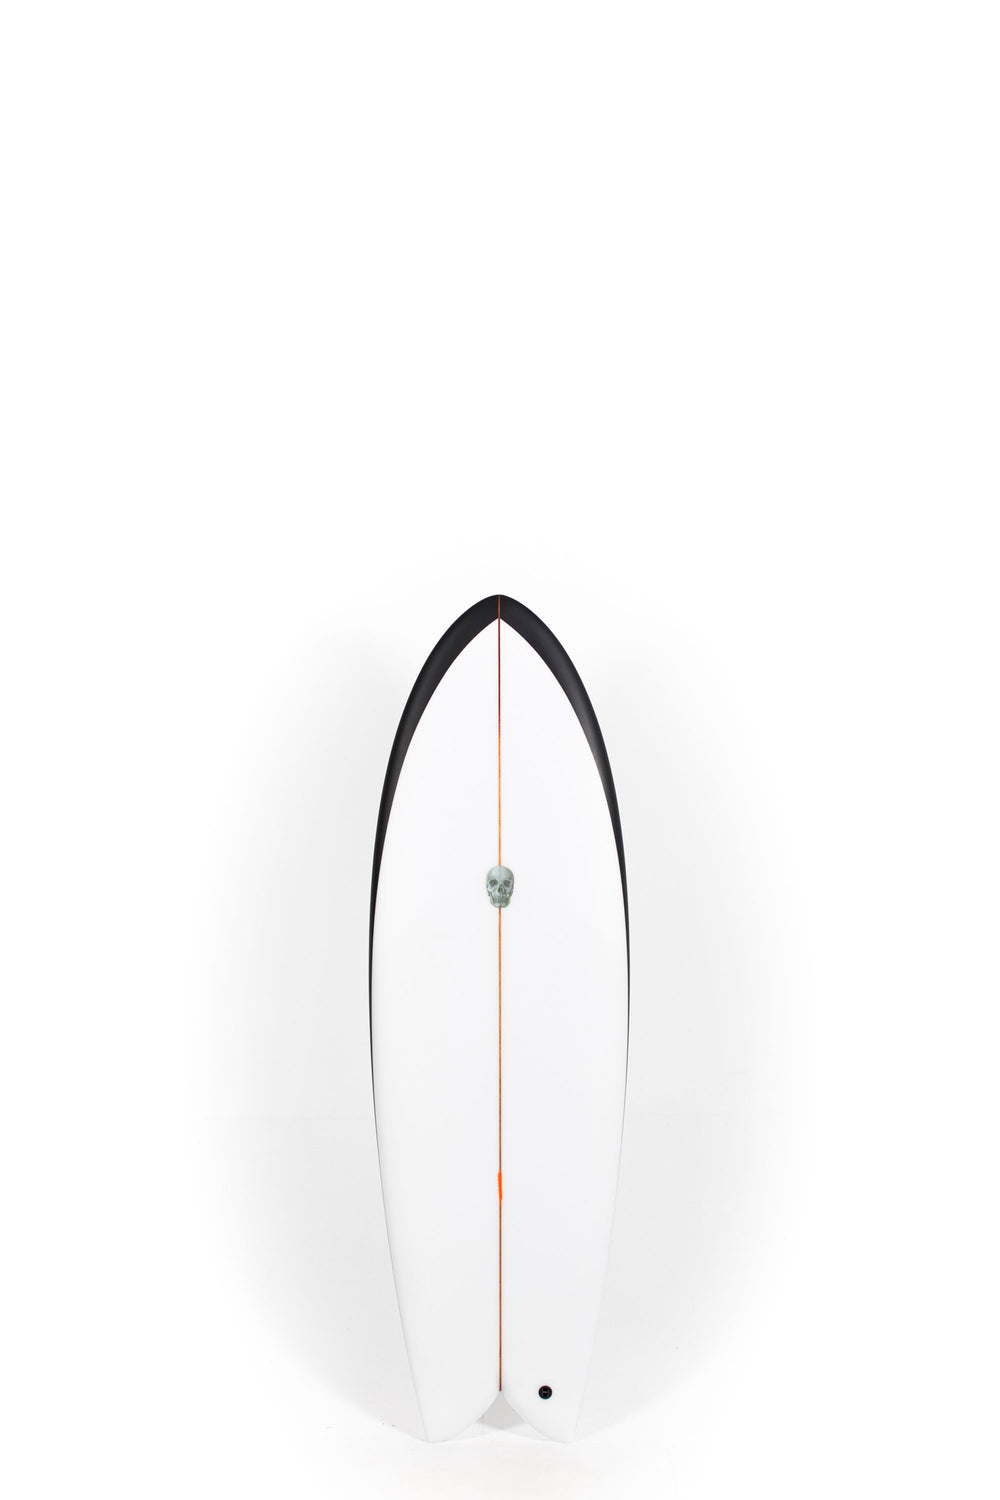 Pukas Surf Shop - Christenson Surfboards - MYCONAUT - 5'7